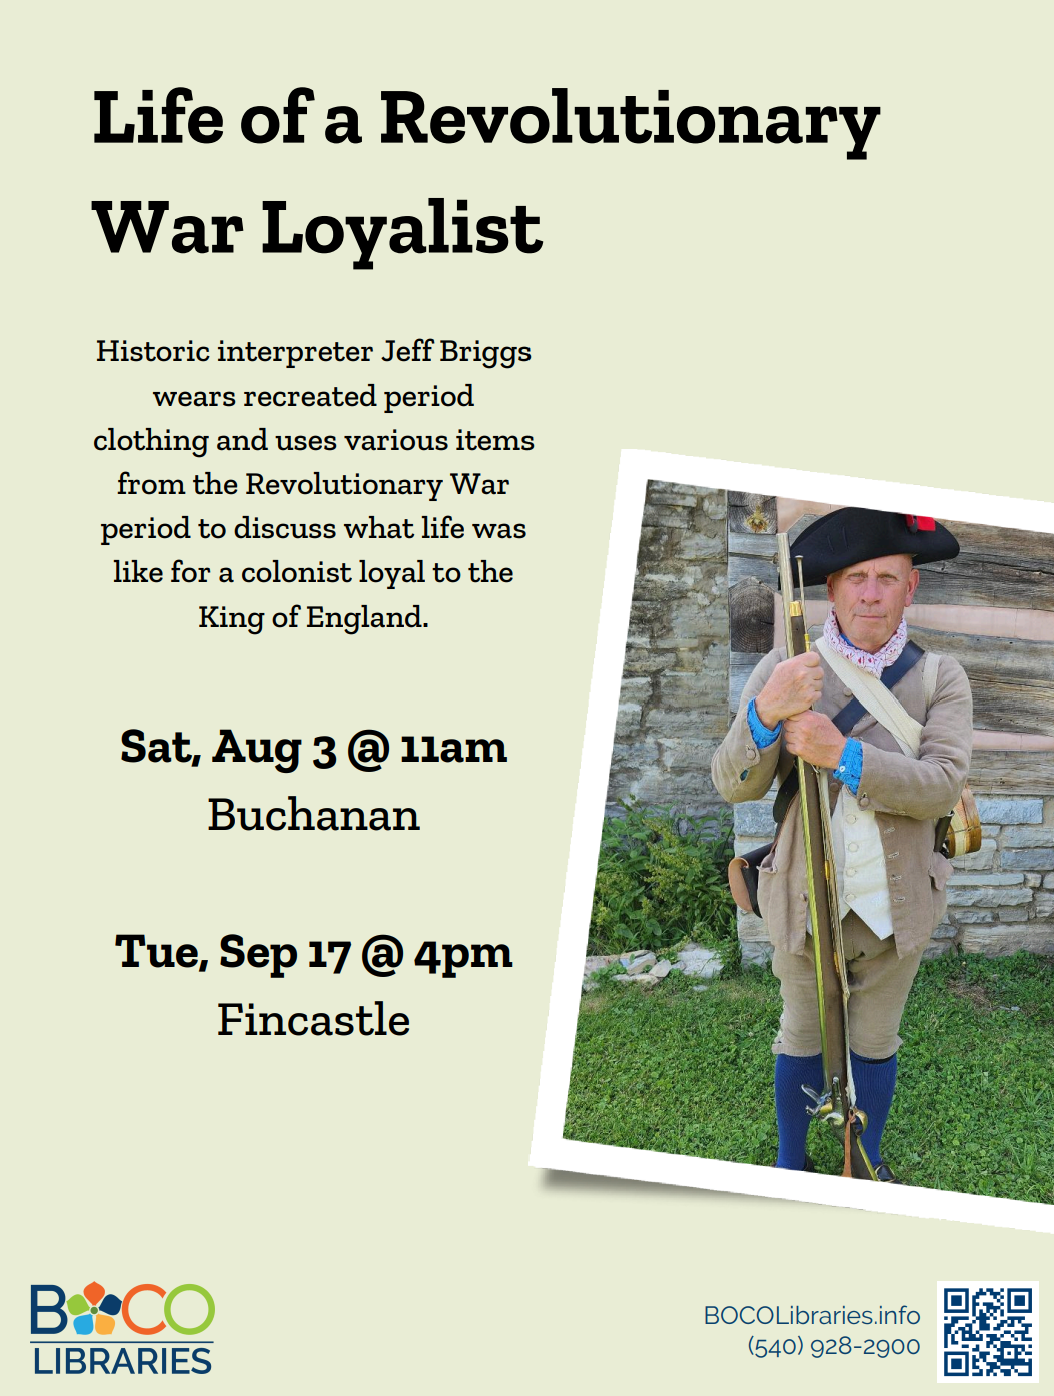 Life of a Revolutionary War Loyalist